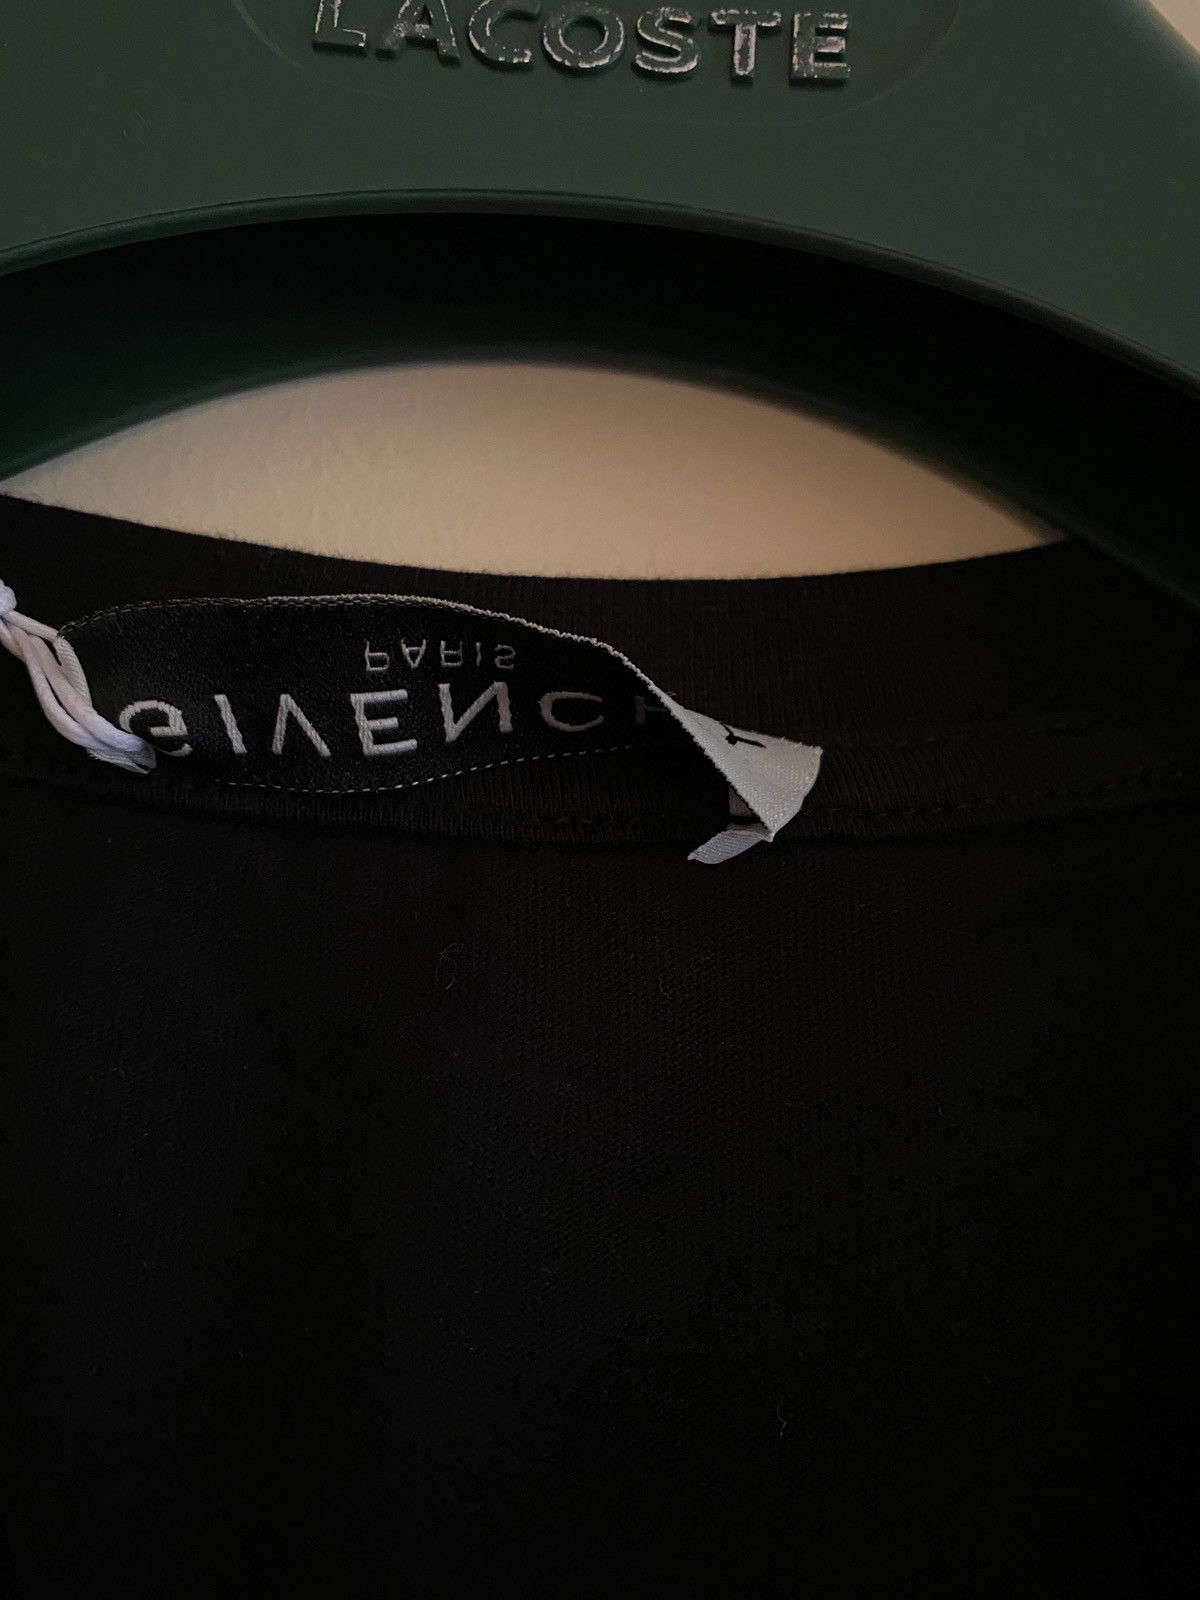 Givenchy Givenchy Paris Signature Black T-shirt Large Size BM70UK3002 Size US L / EU 52-54 / 3 - 5 Thumbnail